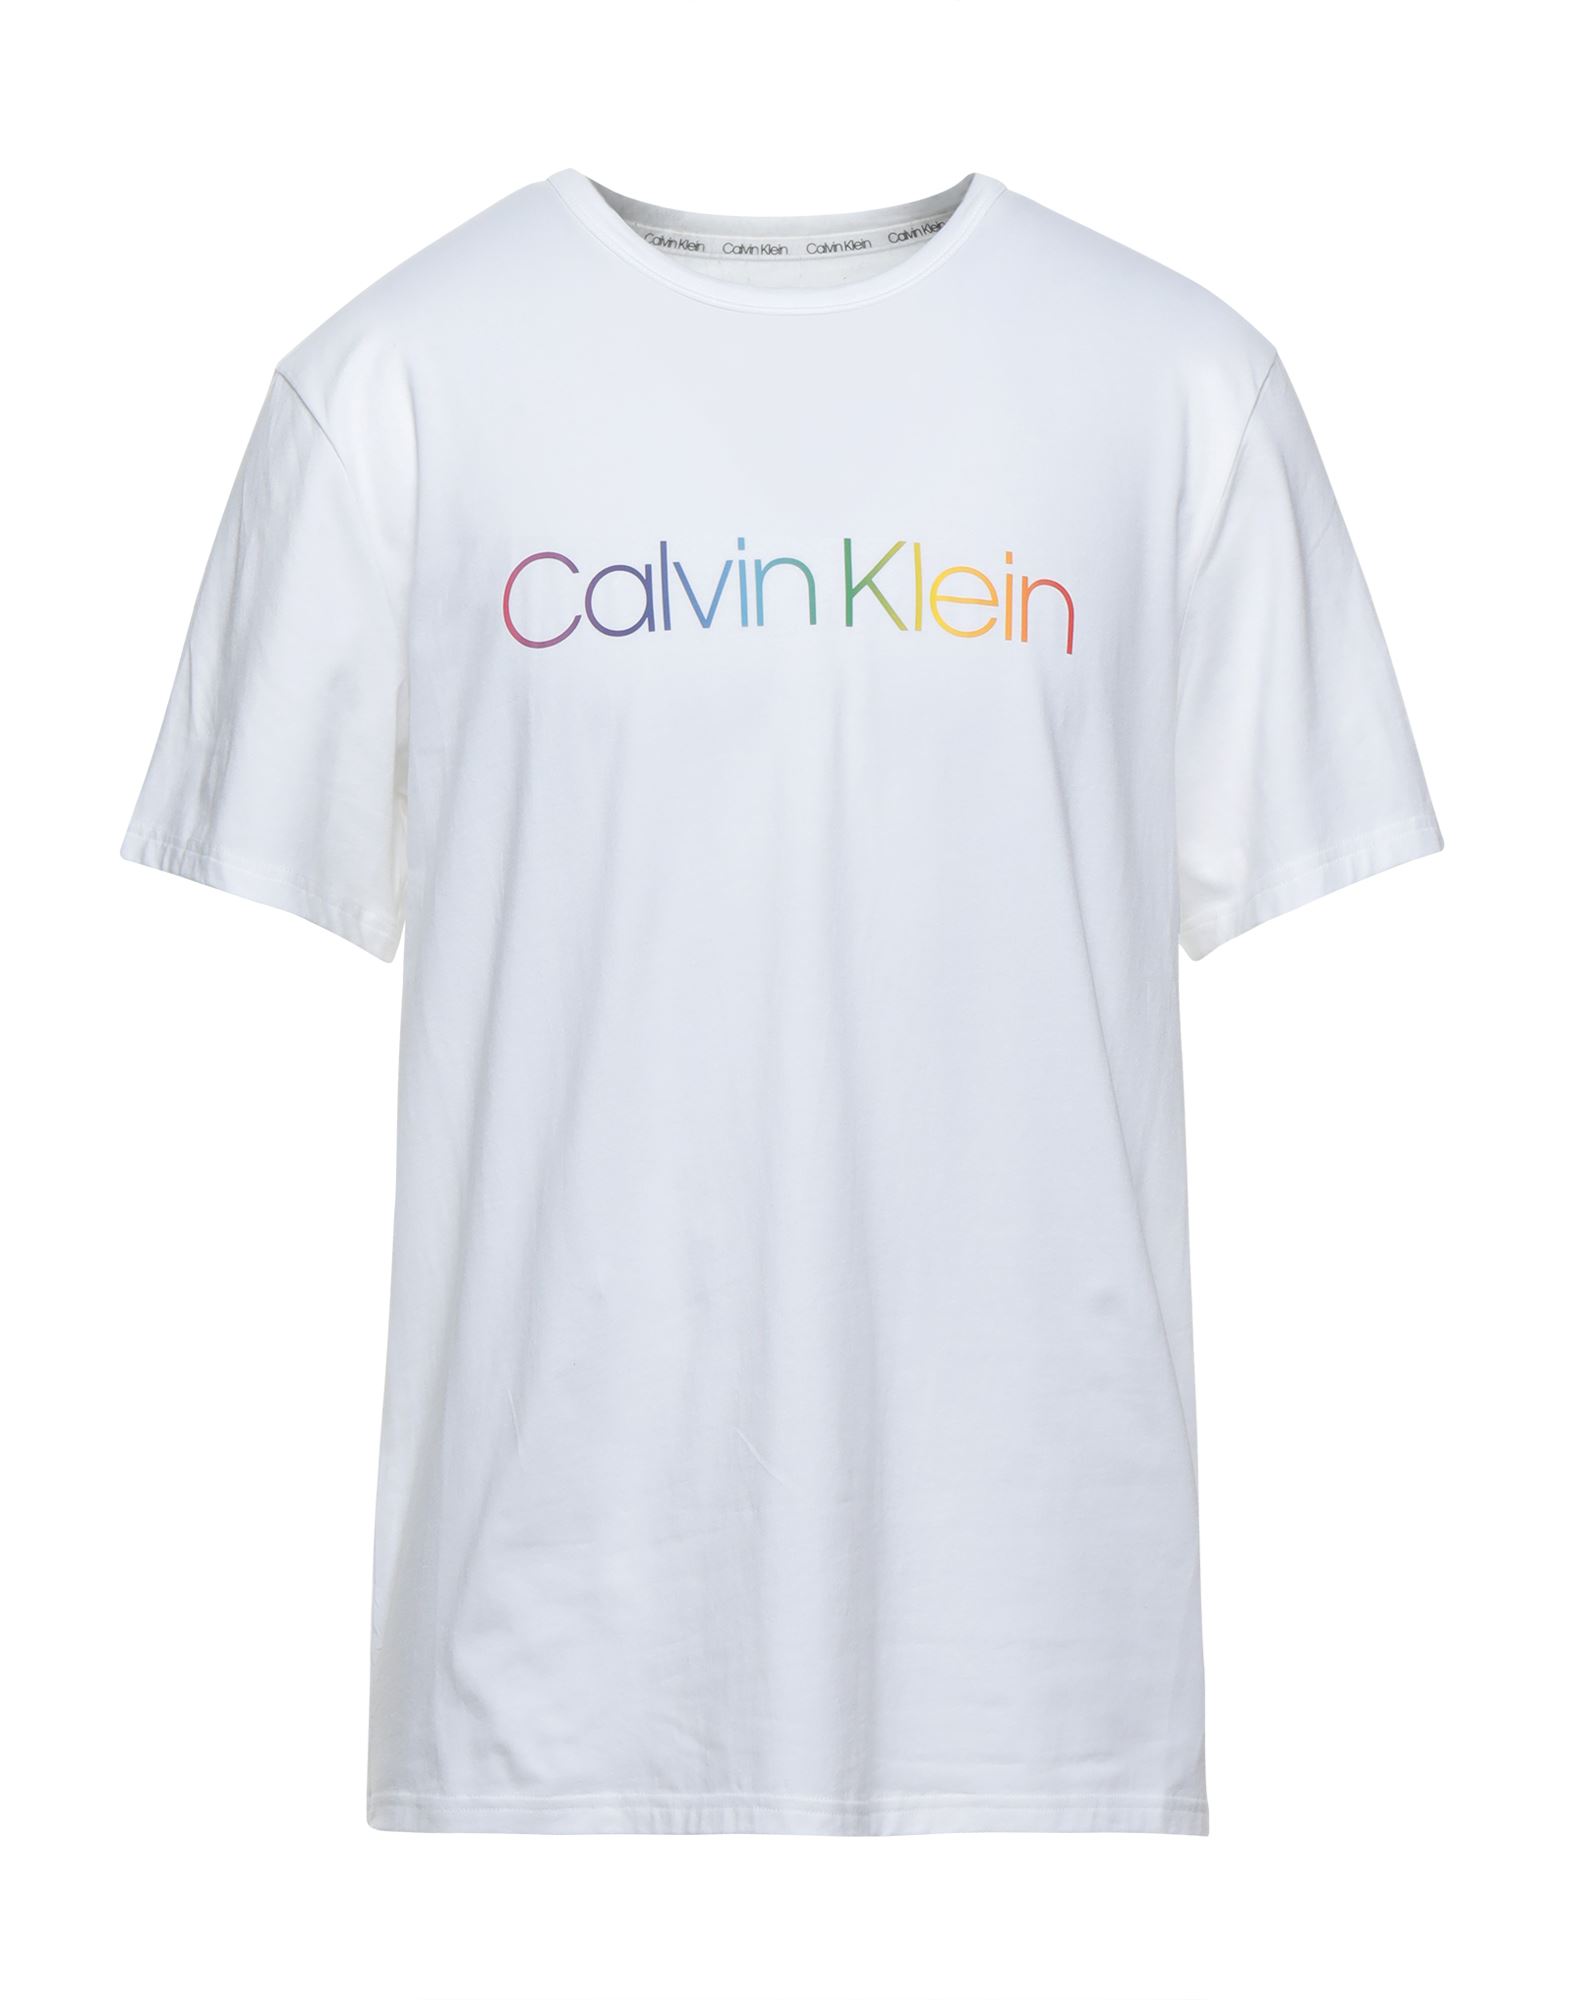 CALVIN KLEIN Футболка calvin klein футболка